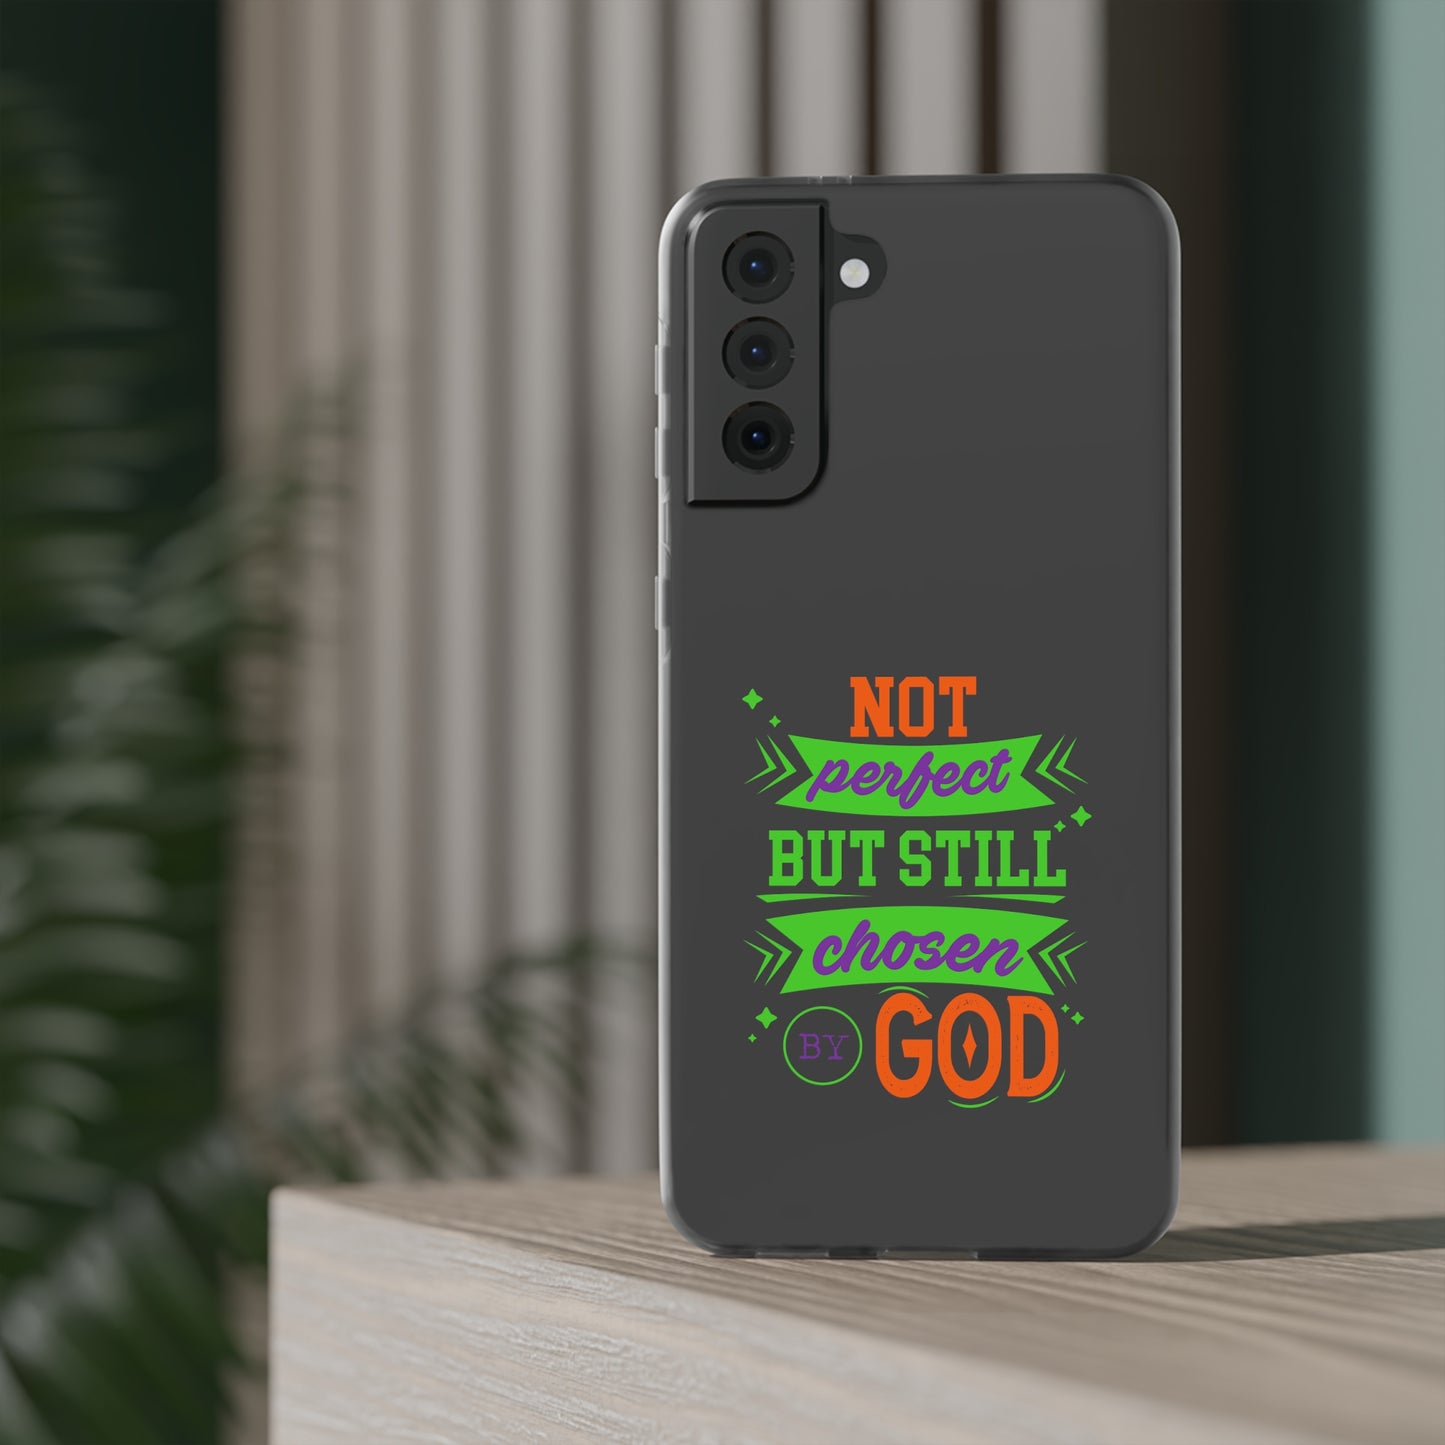 Not Perfect But Still Chosen By God Flexi Phone Case